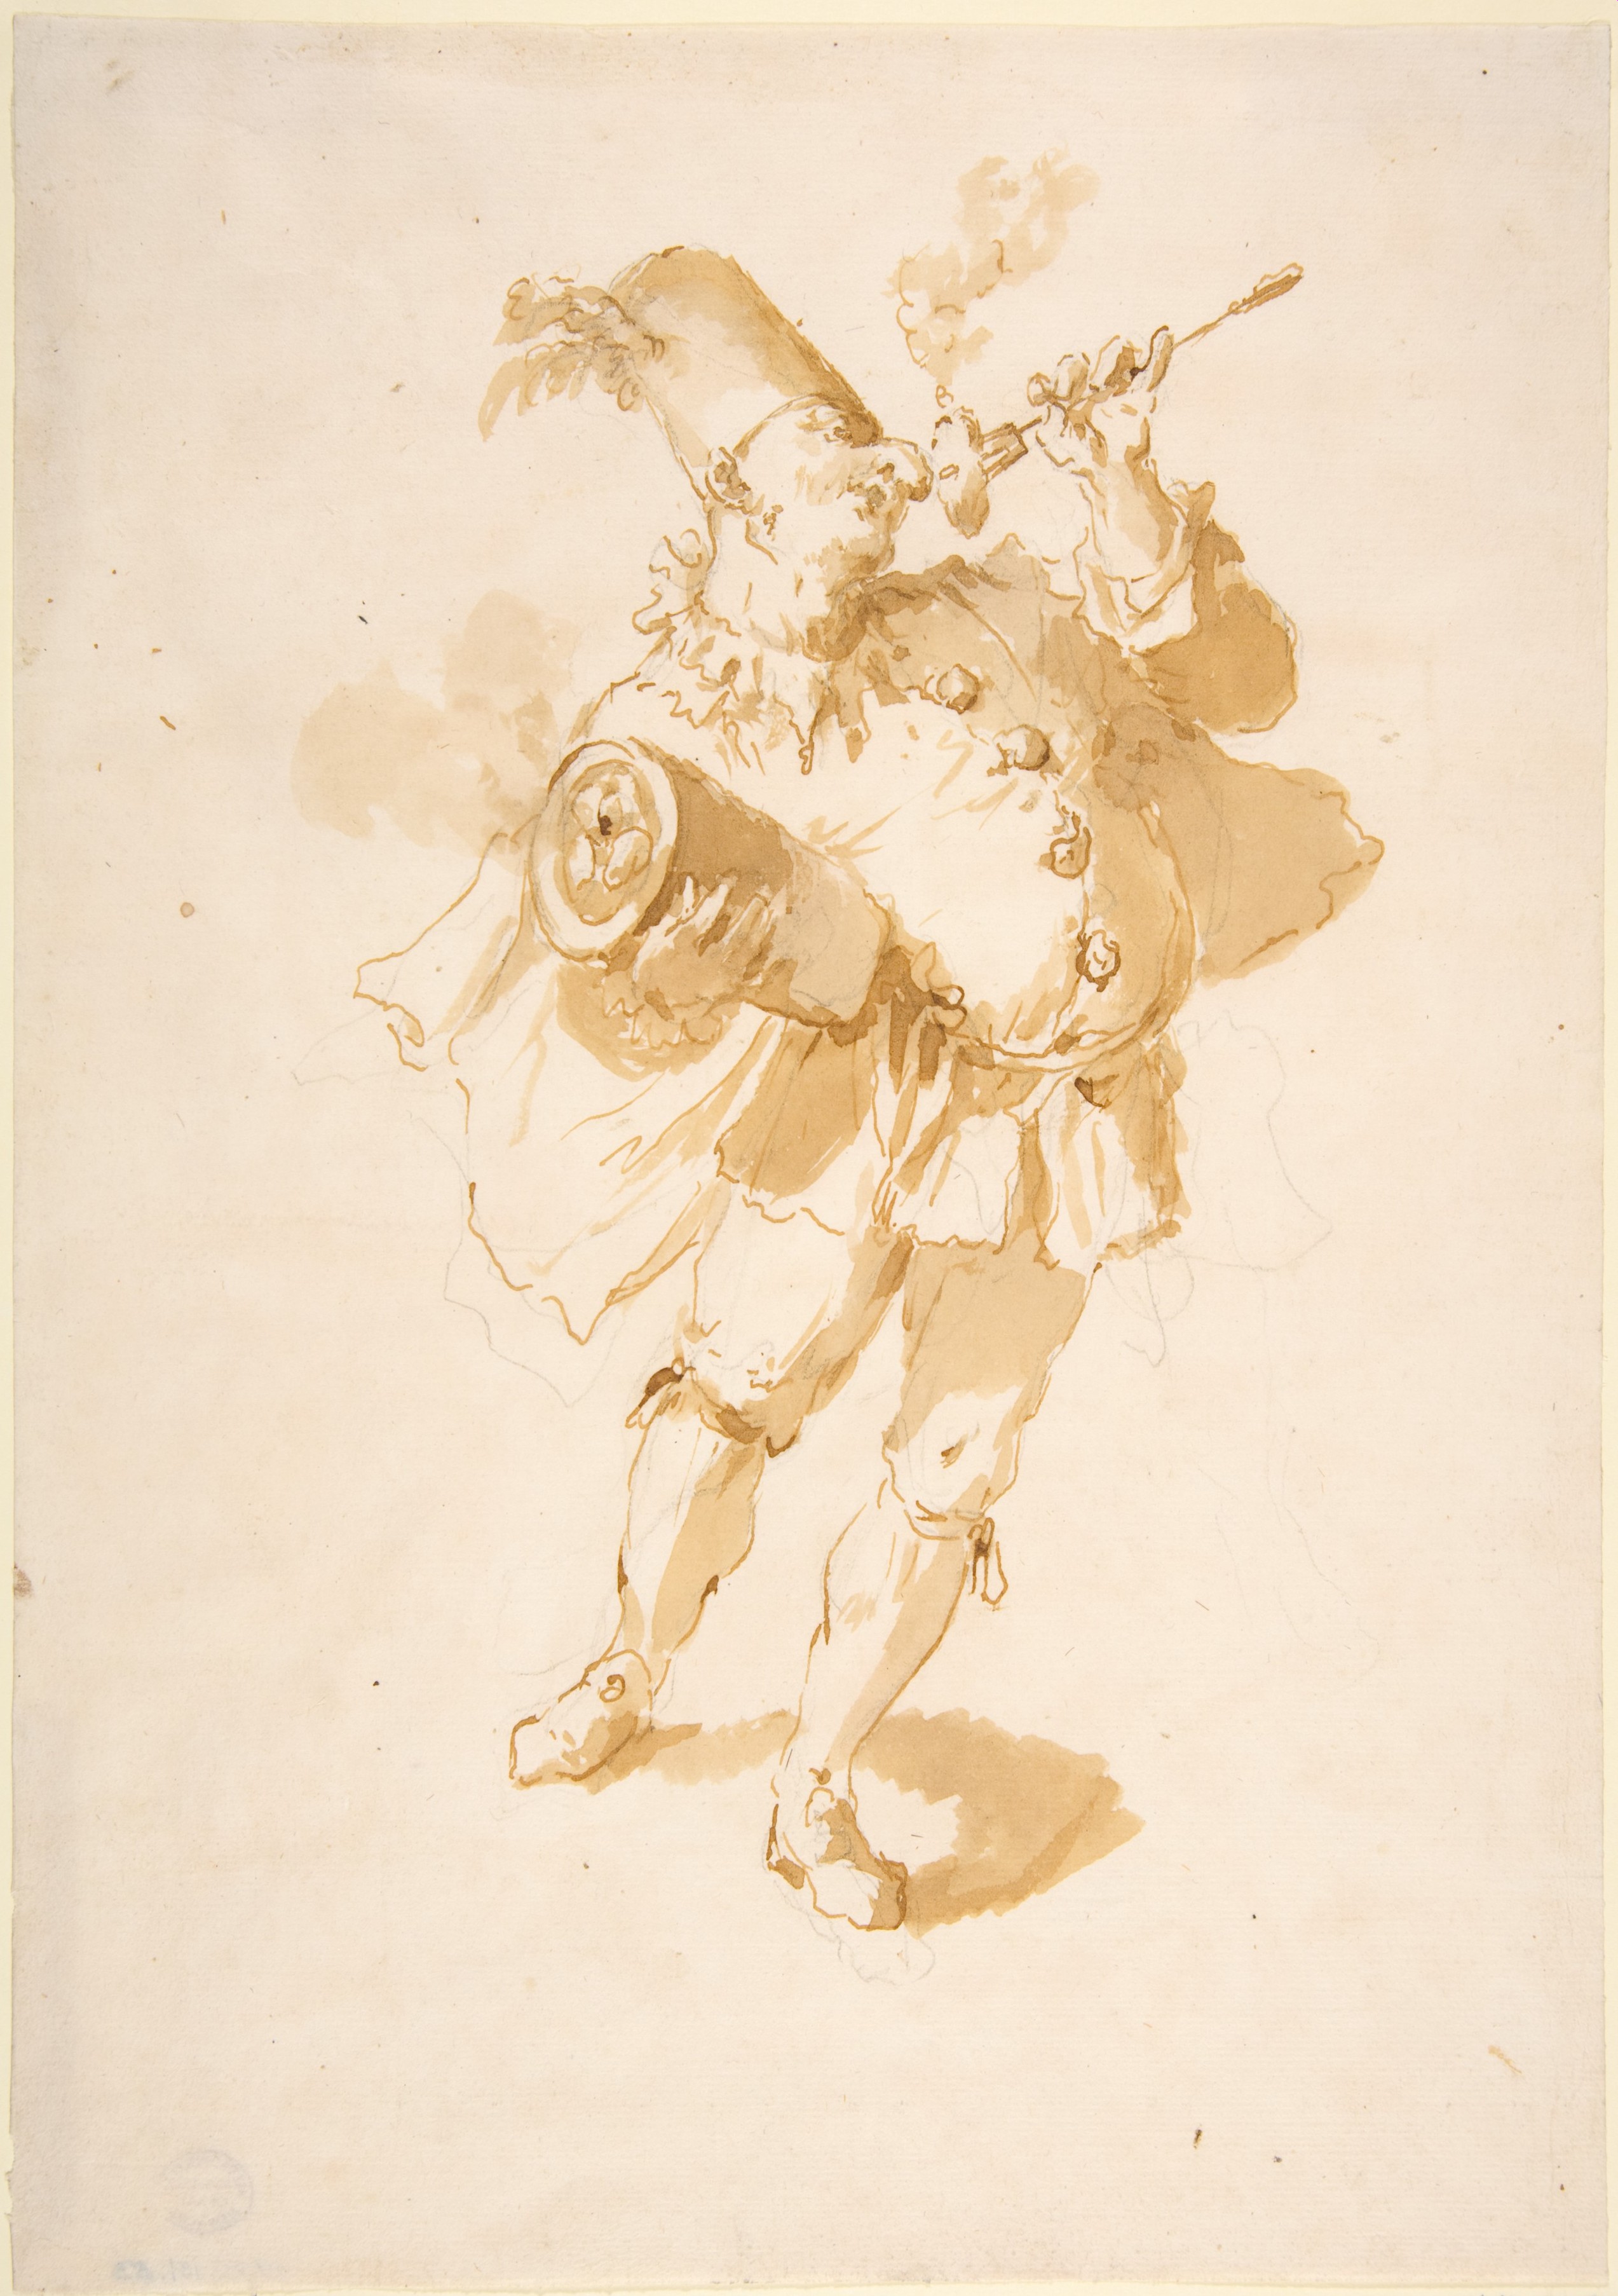 Giovanni Battista Tiepolo Artworks collected in Metmuseum